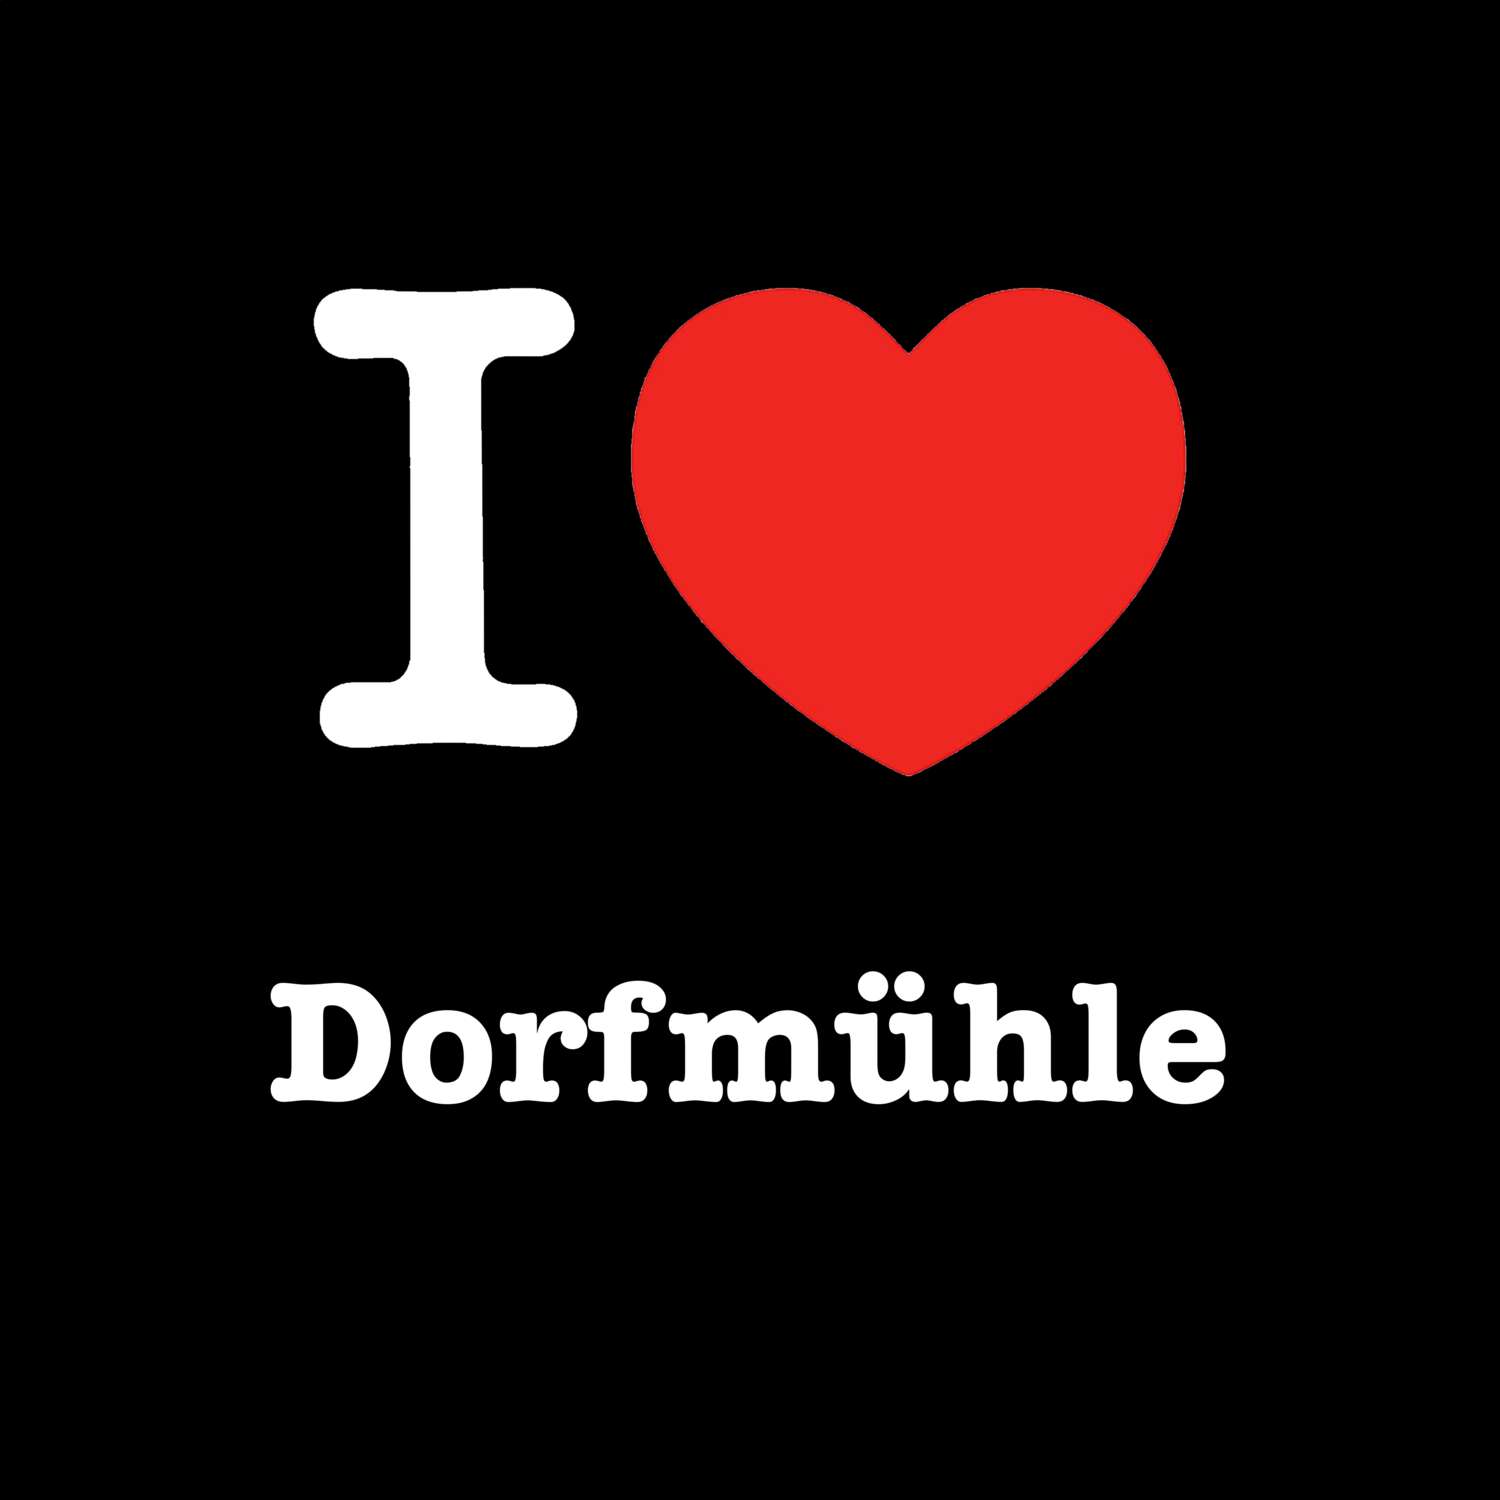 Dorfmühle T-Shirt »I love«